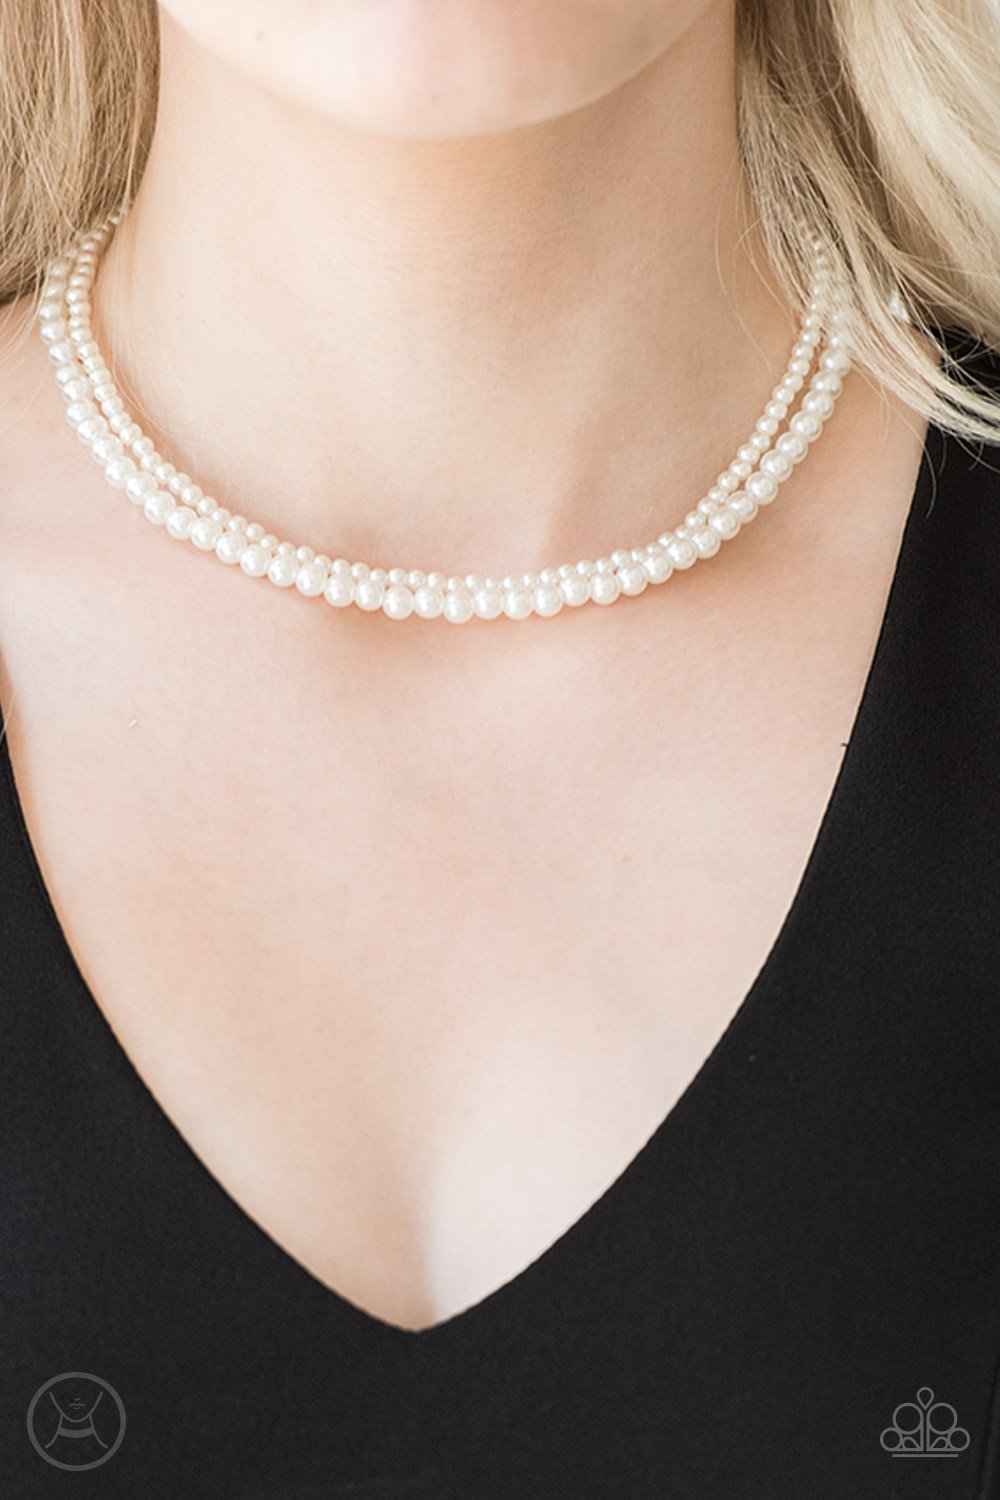 Ladies Choice - white - Paparazzi choker necklace